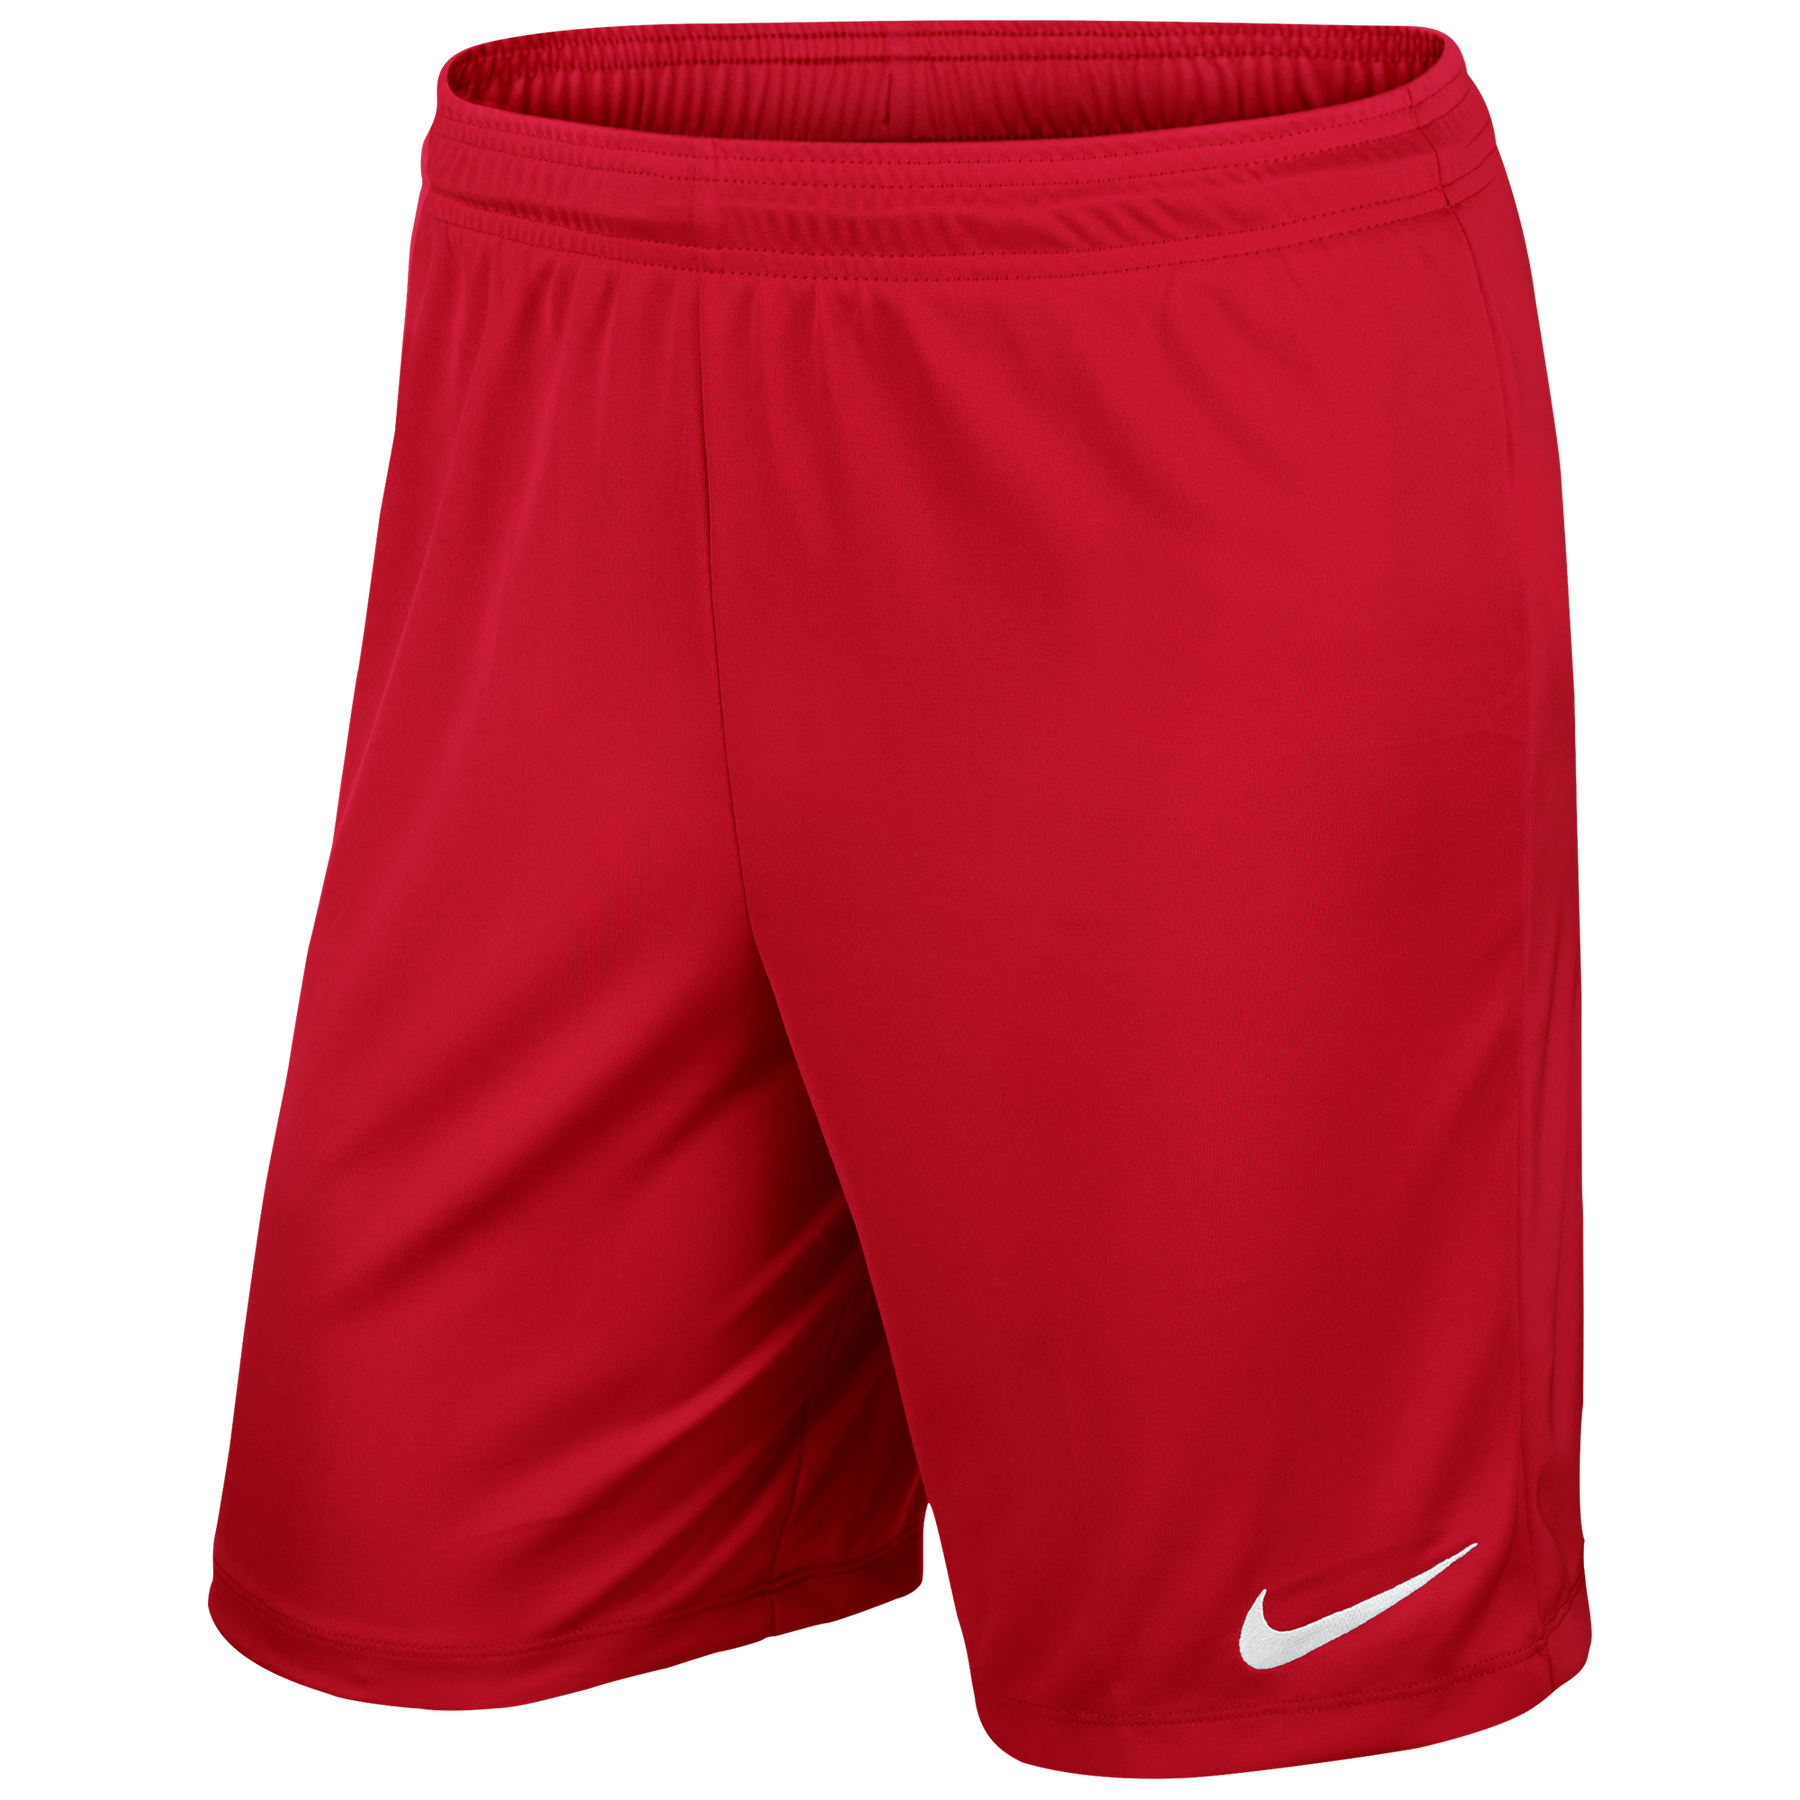 Ingles F.C. - Nike Park III shorts, Red, Youth. - Fanatics Supplies